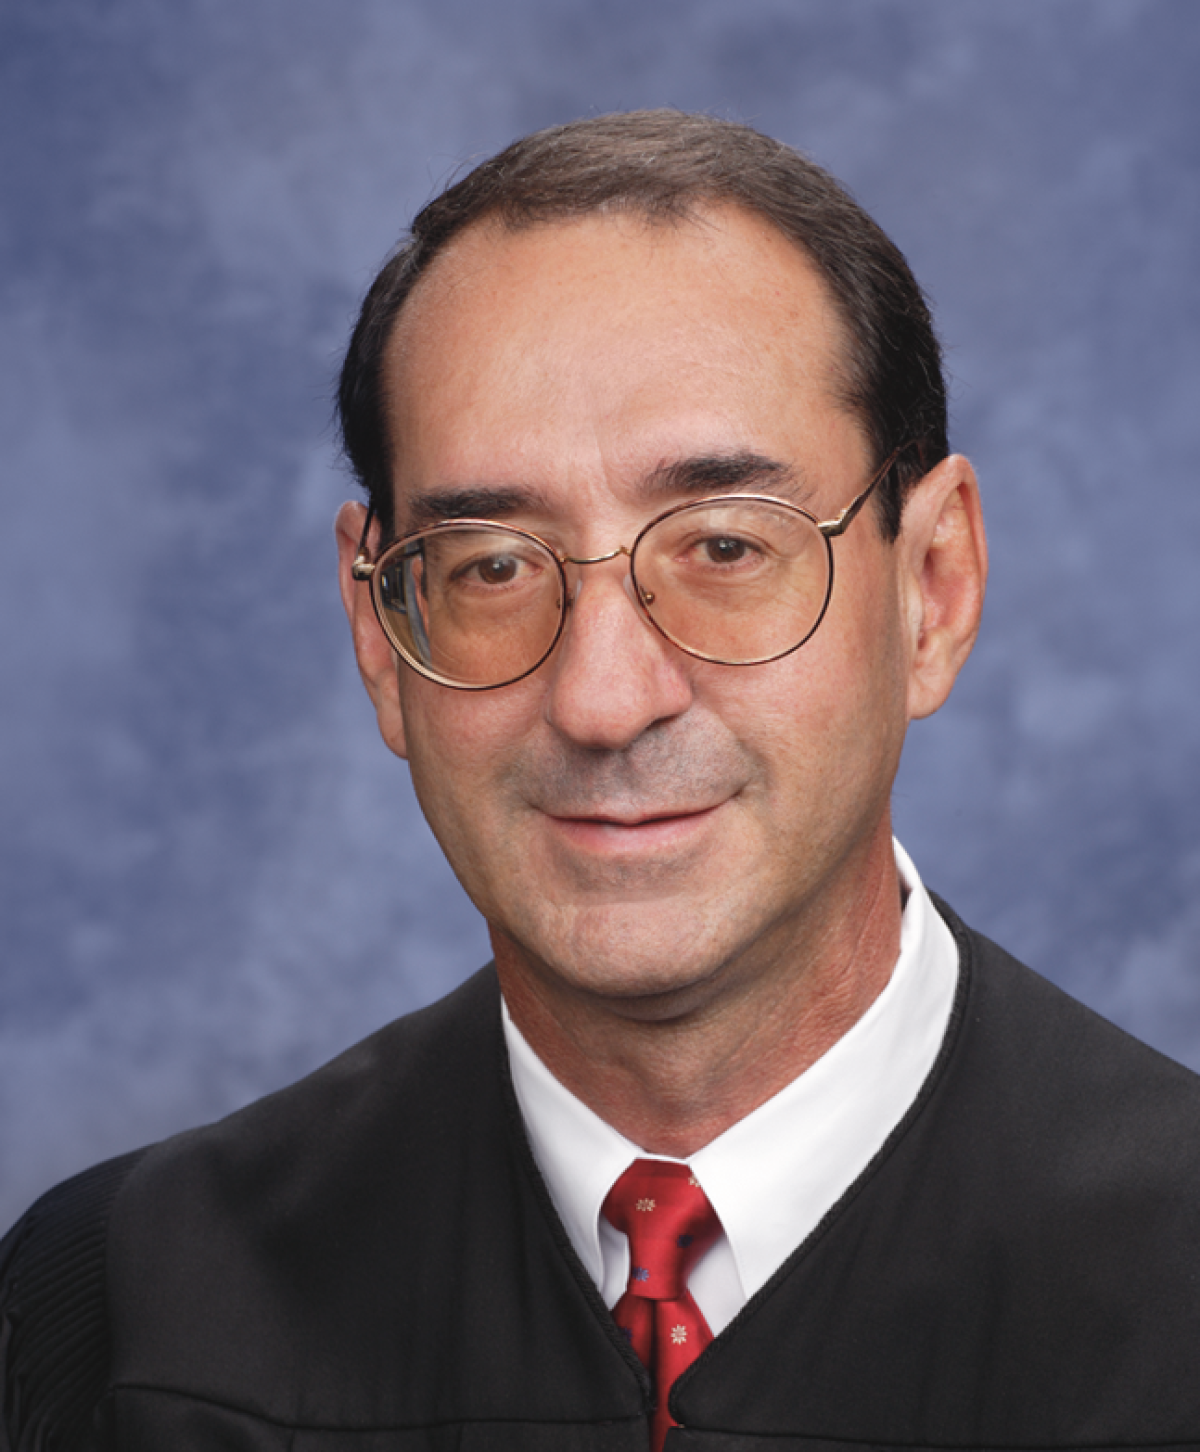 U.S. District Court Judge Roger Benitez